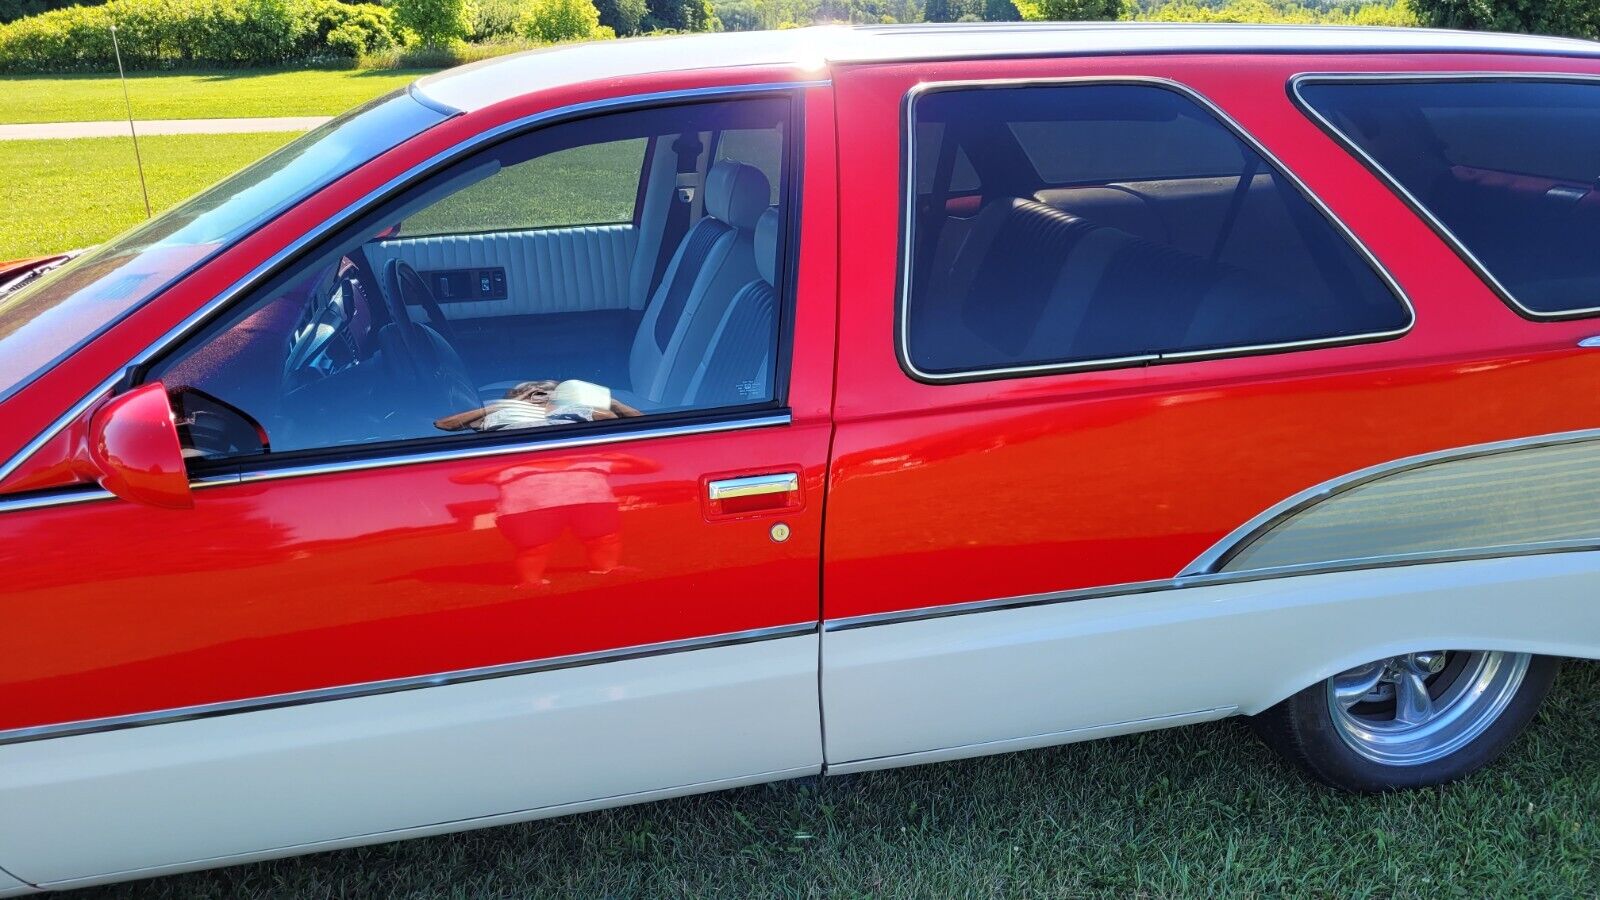 Kreek kanaal minimum 1992 Chevrolet Majestic Nomad Is a Shameless Caprice With Bel Air Fins -  autoevolution